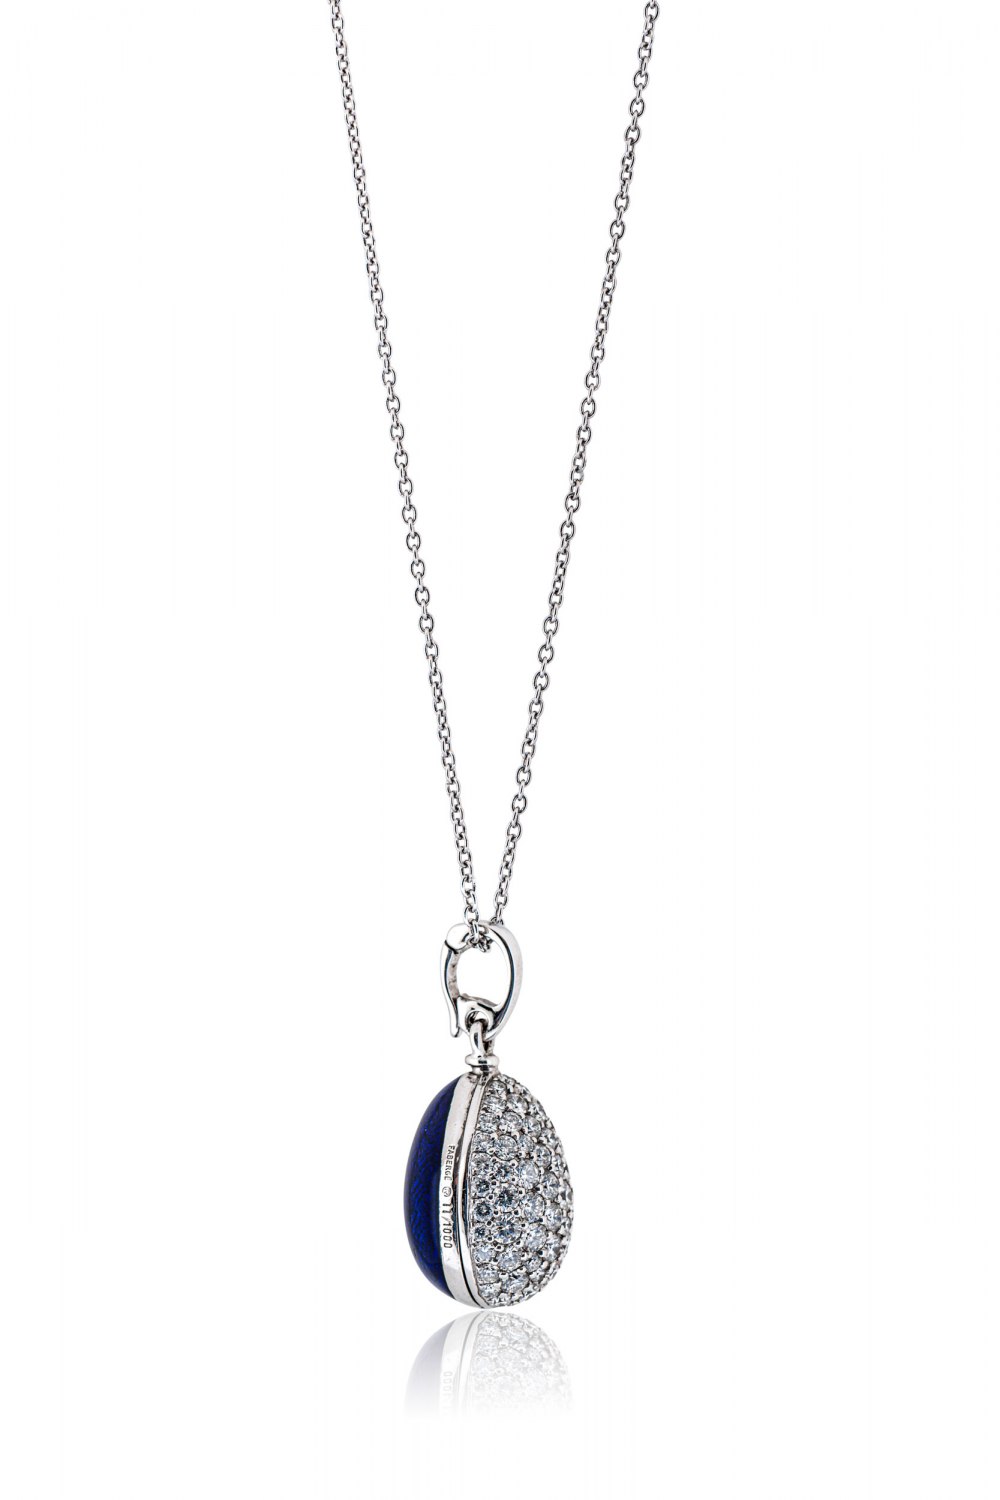 FABERGE - Diamond Royal Blue Egg Pendant Necklace